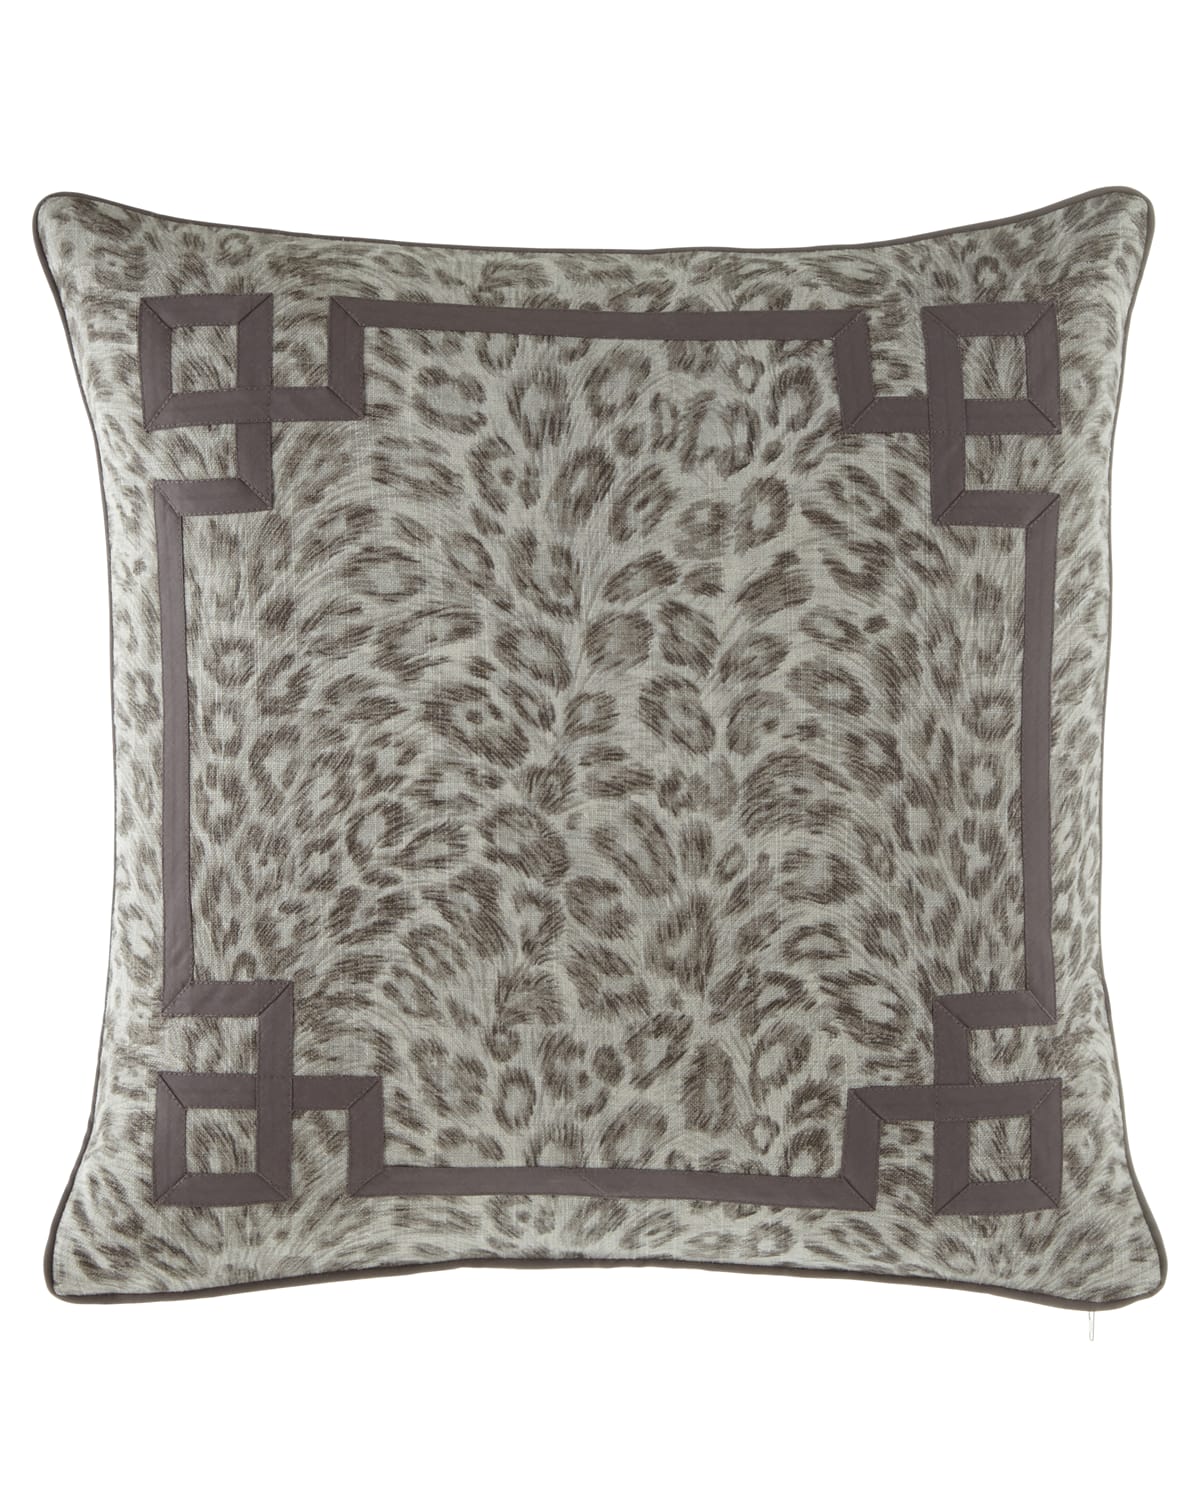 Image Jane Wilner Designs Bally Leopard-Print w/ Fretwork Decorative Pillow